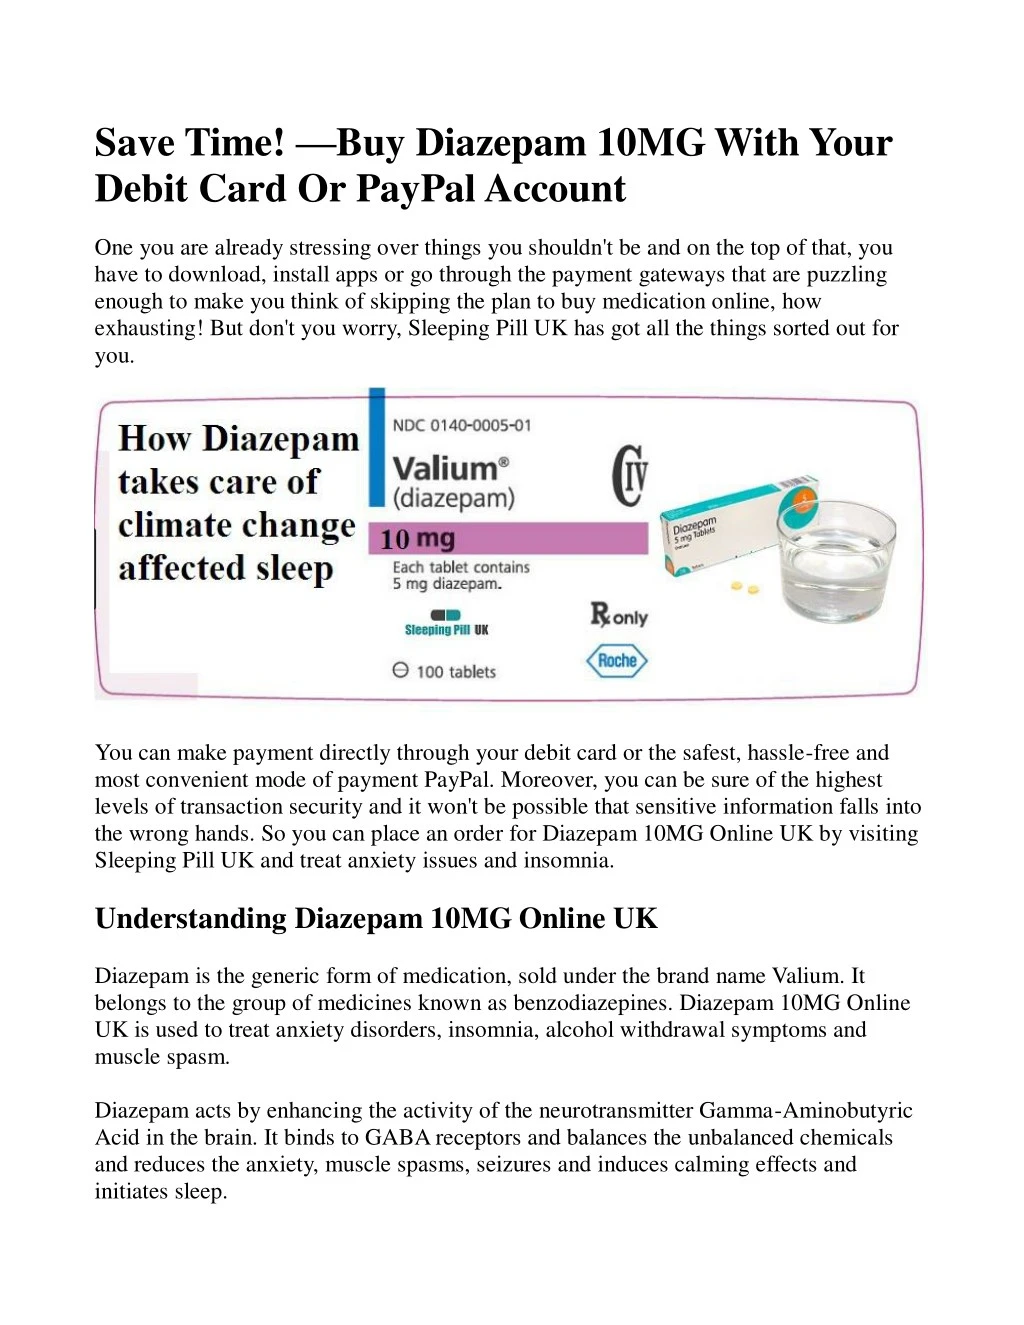 Paypal using uk diazepam buy